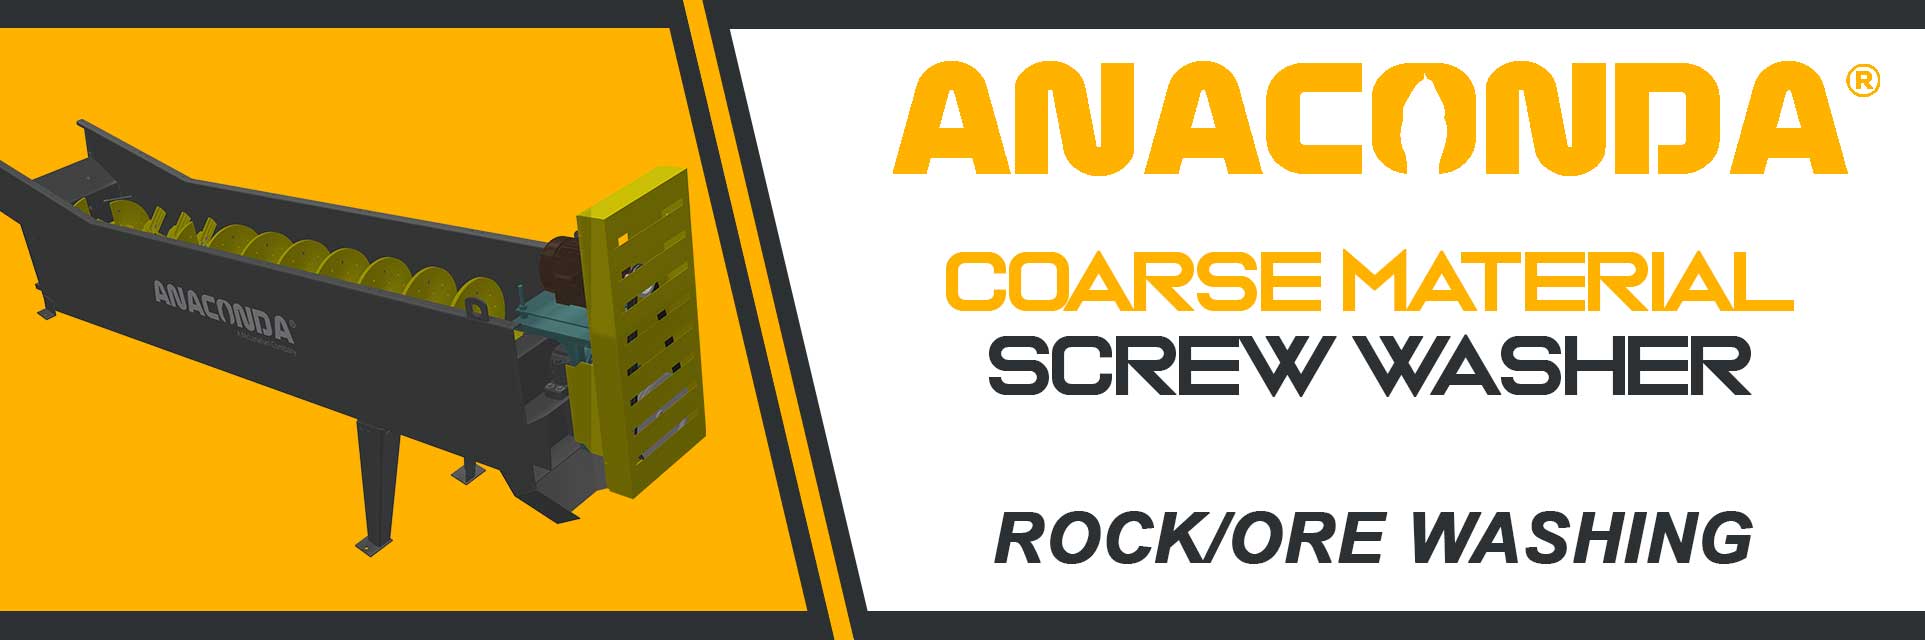 Coarse Material Screw Washer - An Anaconda Washing Solution